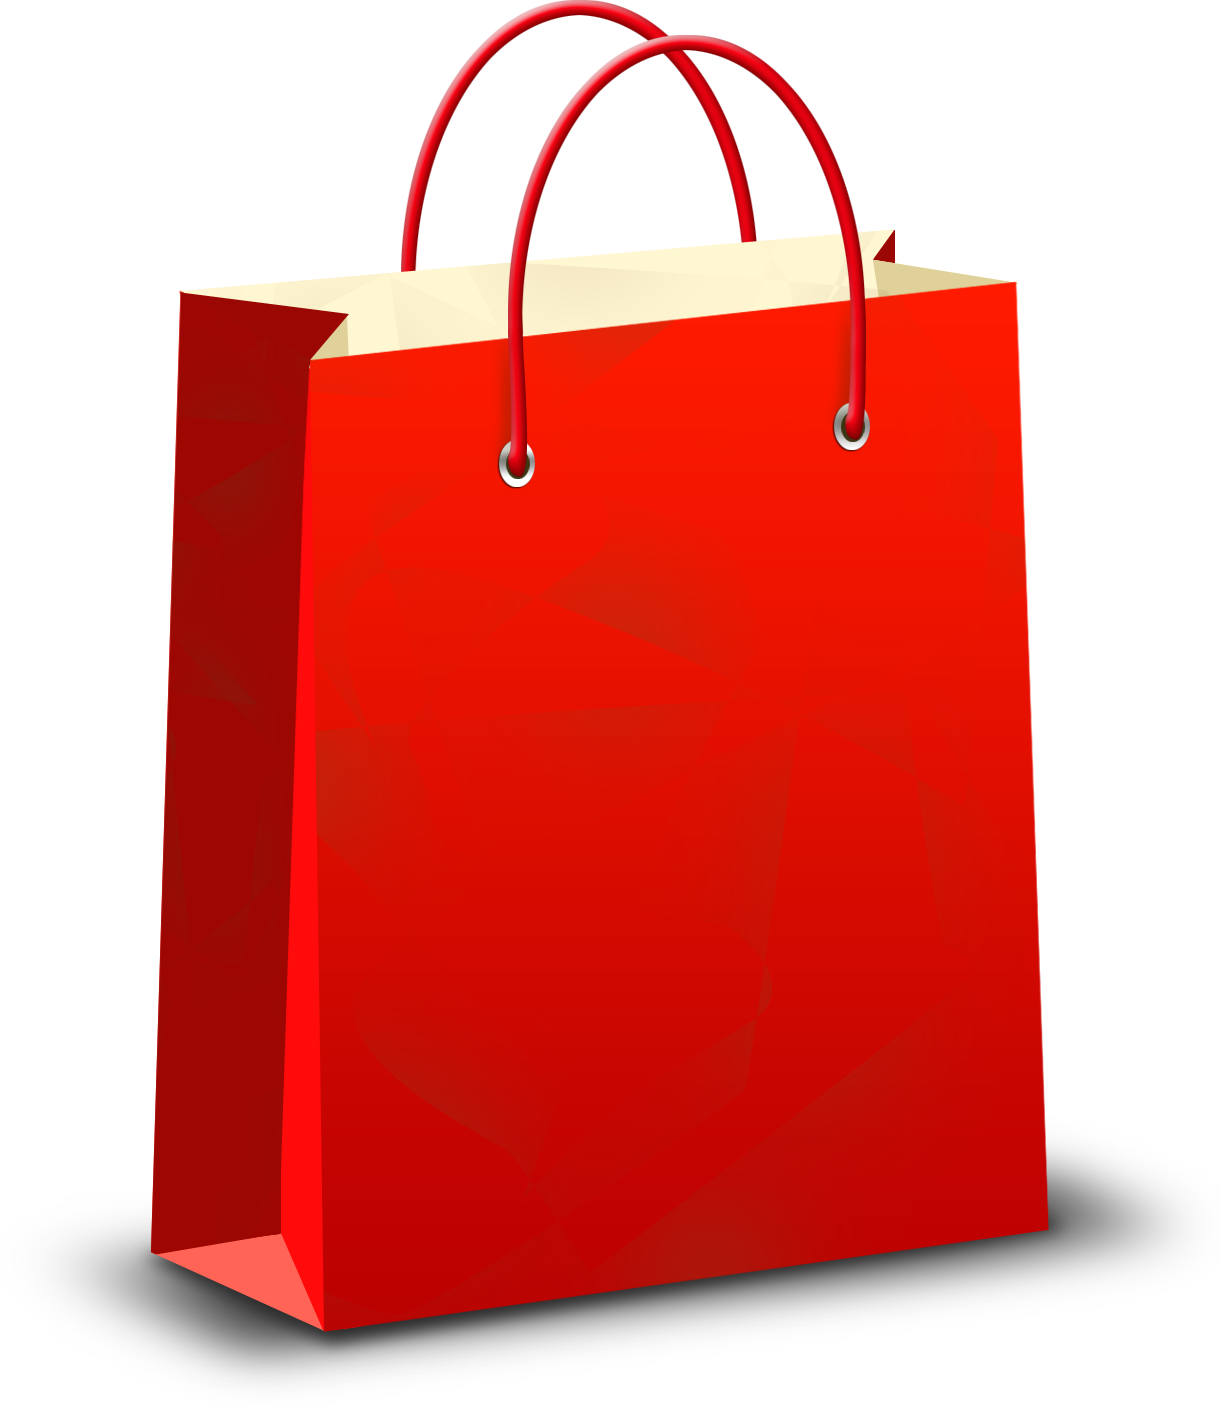 Shopping bag Icon - Paper shopping bag PNG image png download - 1221*